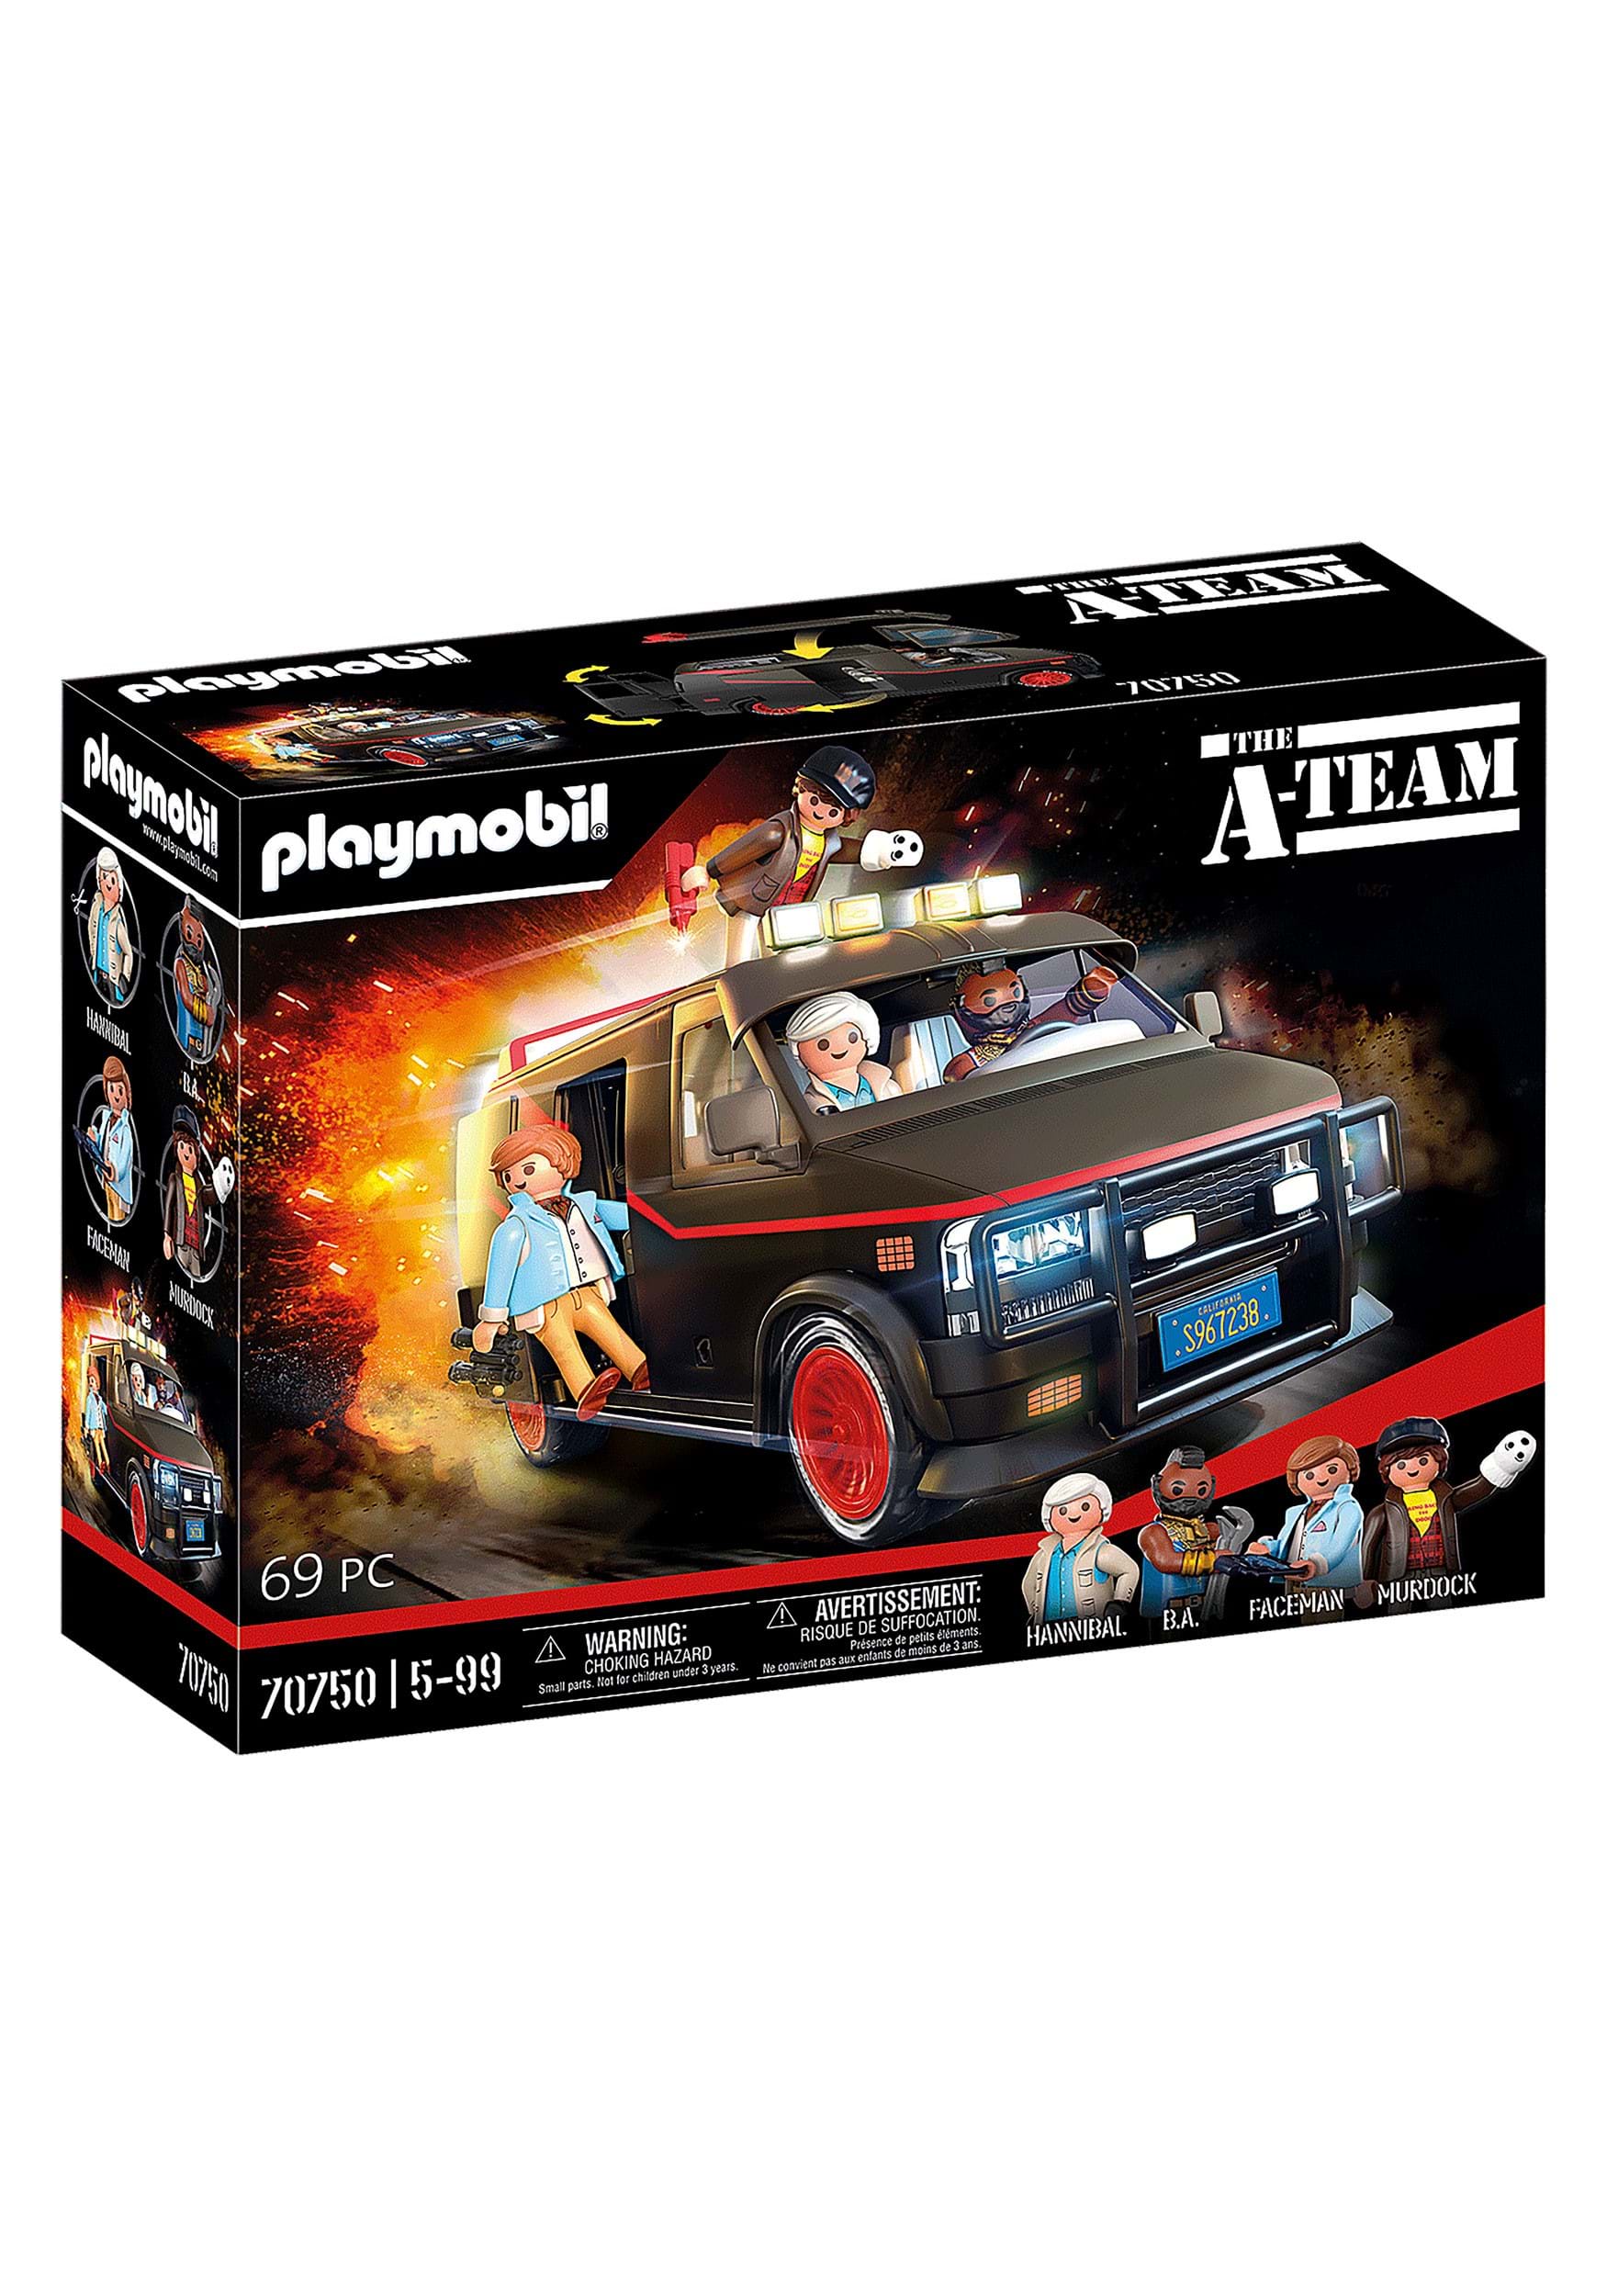 Playmobil A-Team Van Figure